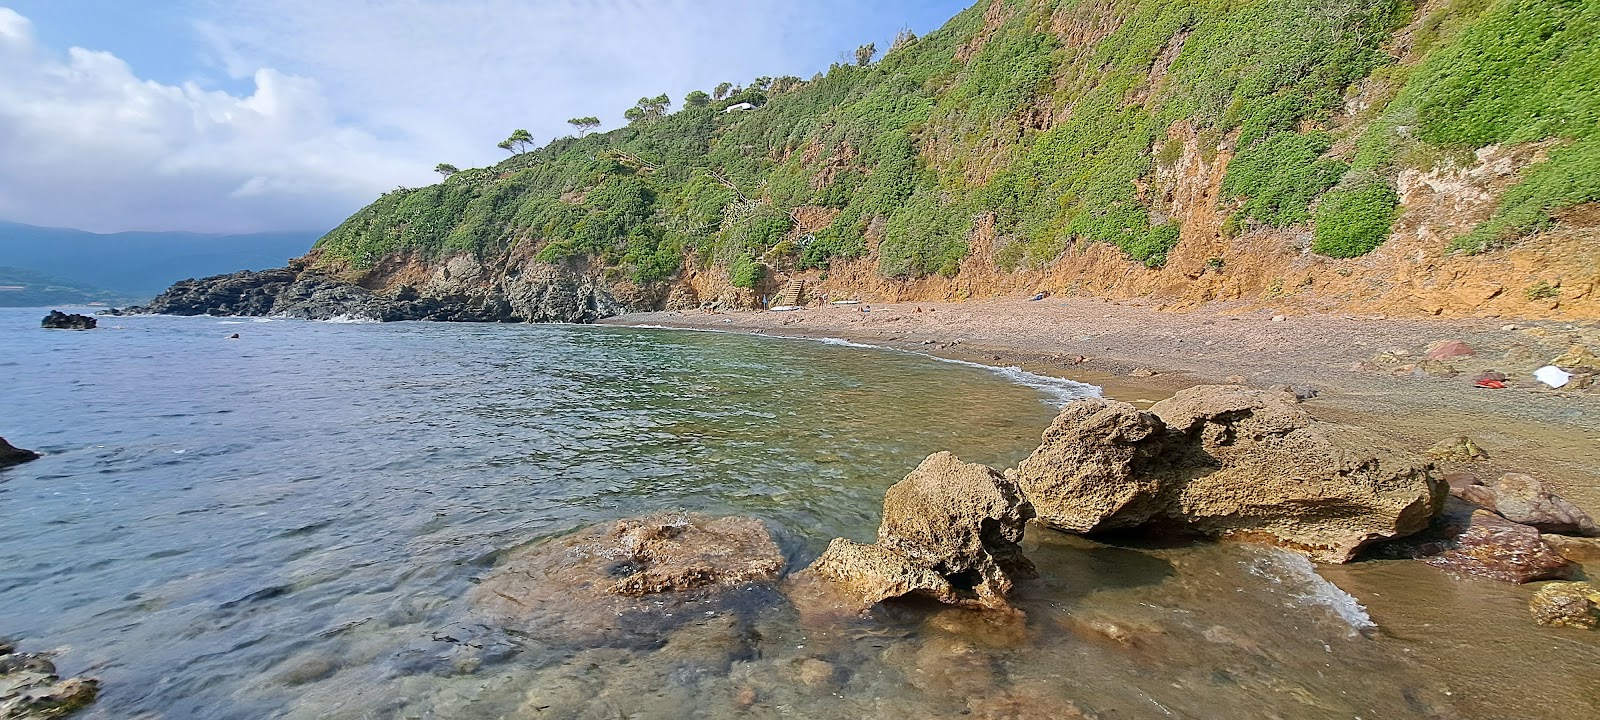 Photo of Spiaggia Canata located in natural area